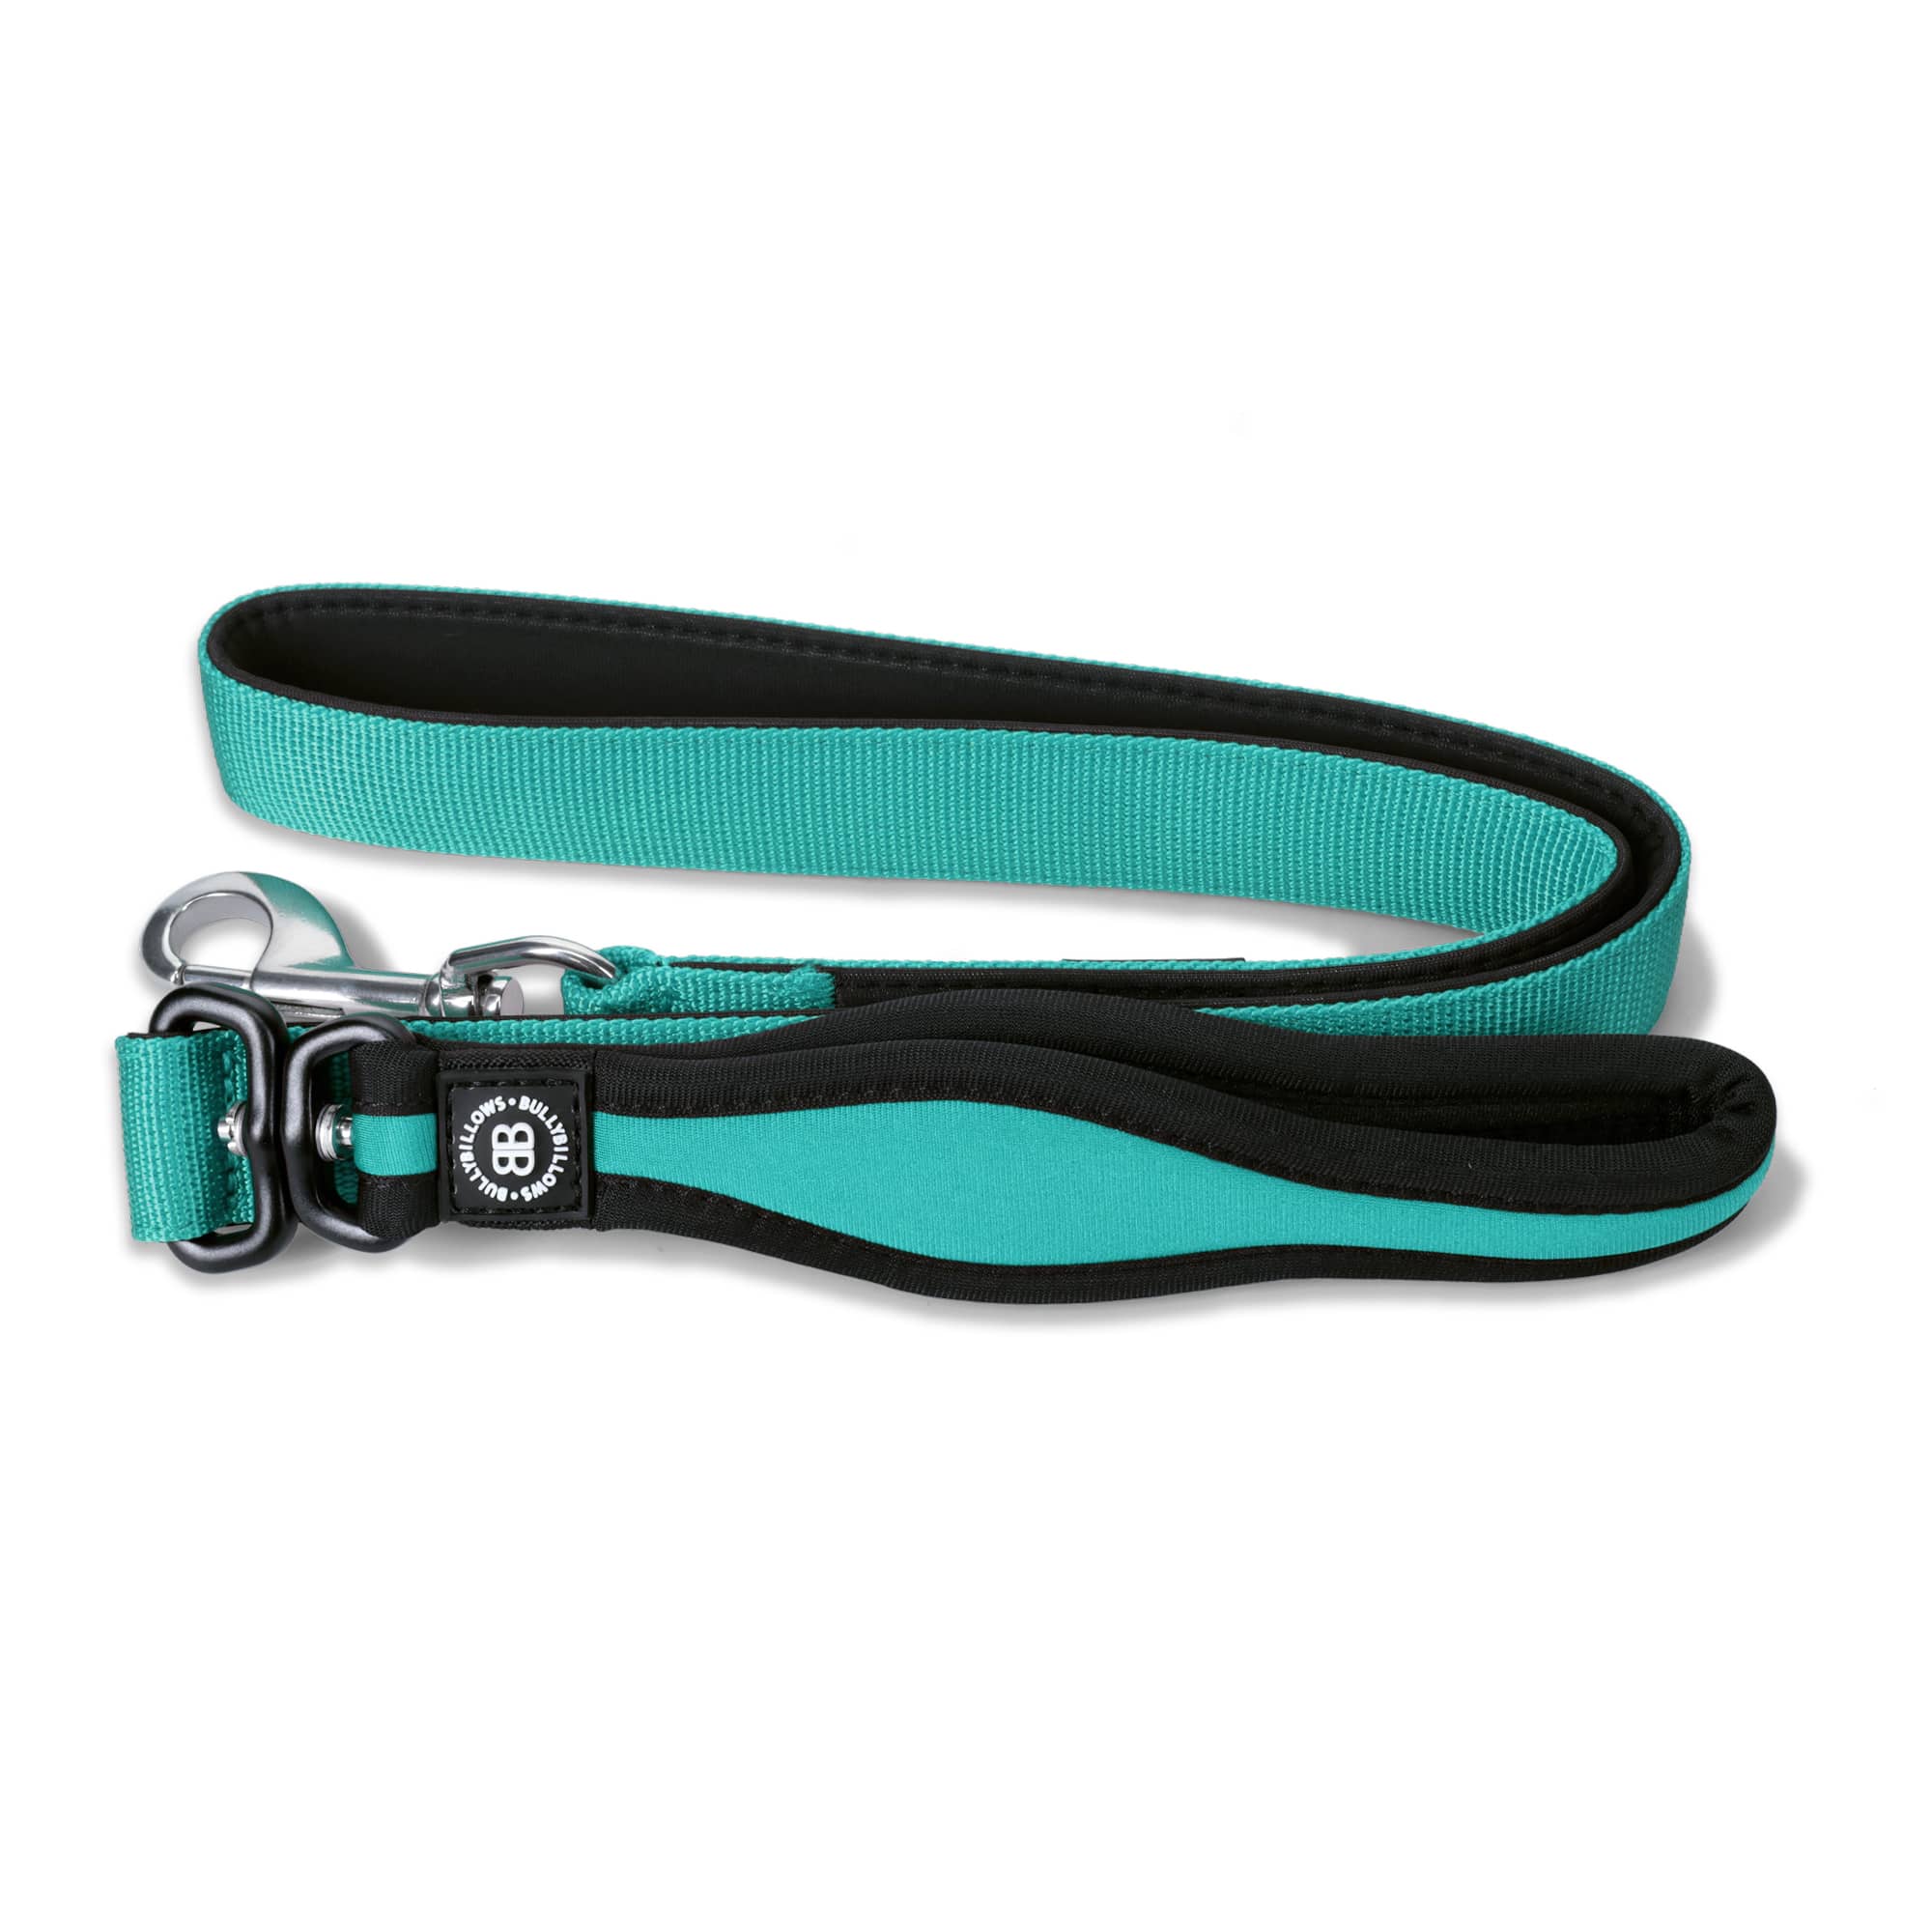 5cm Slip on Collar | Soft Padded & Reflective - Turquoise v2.0 